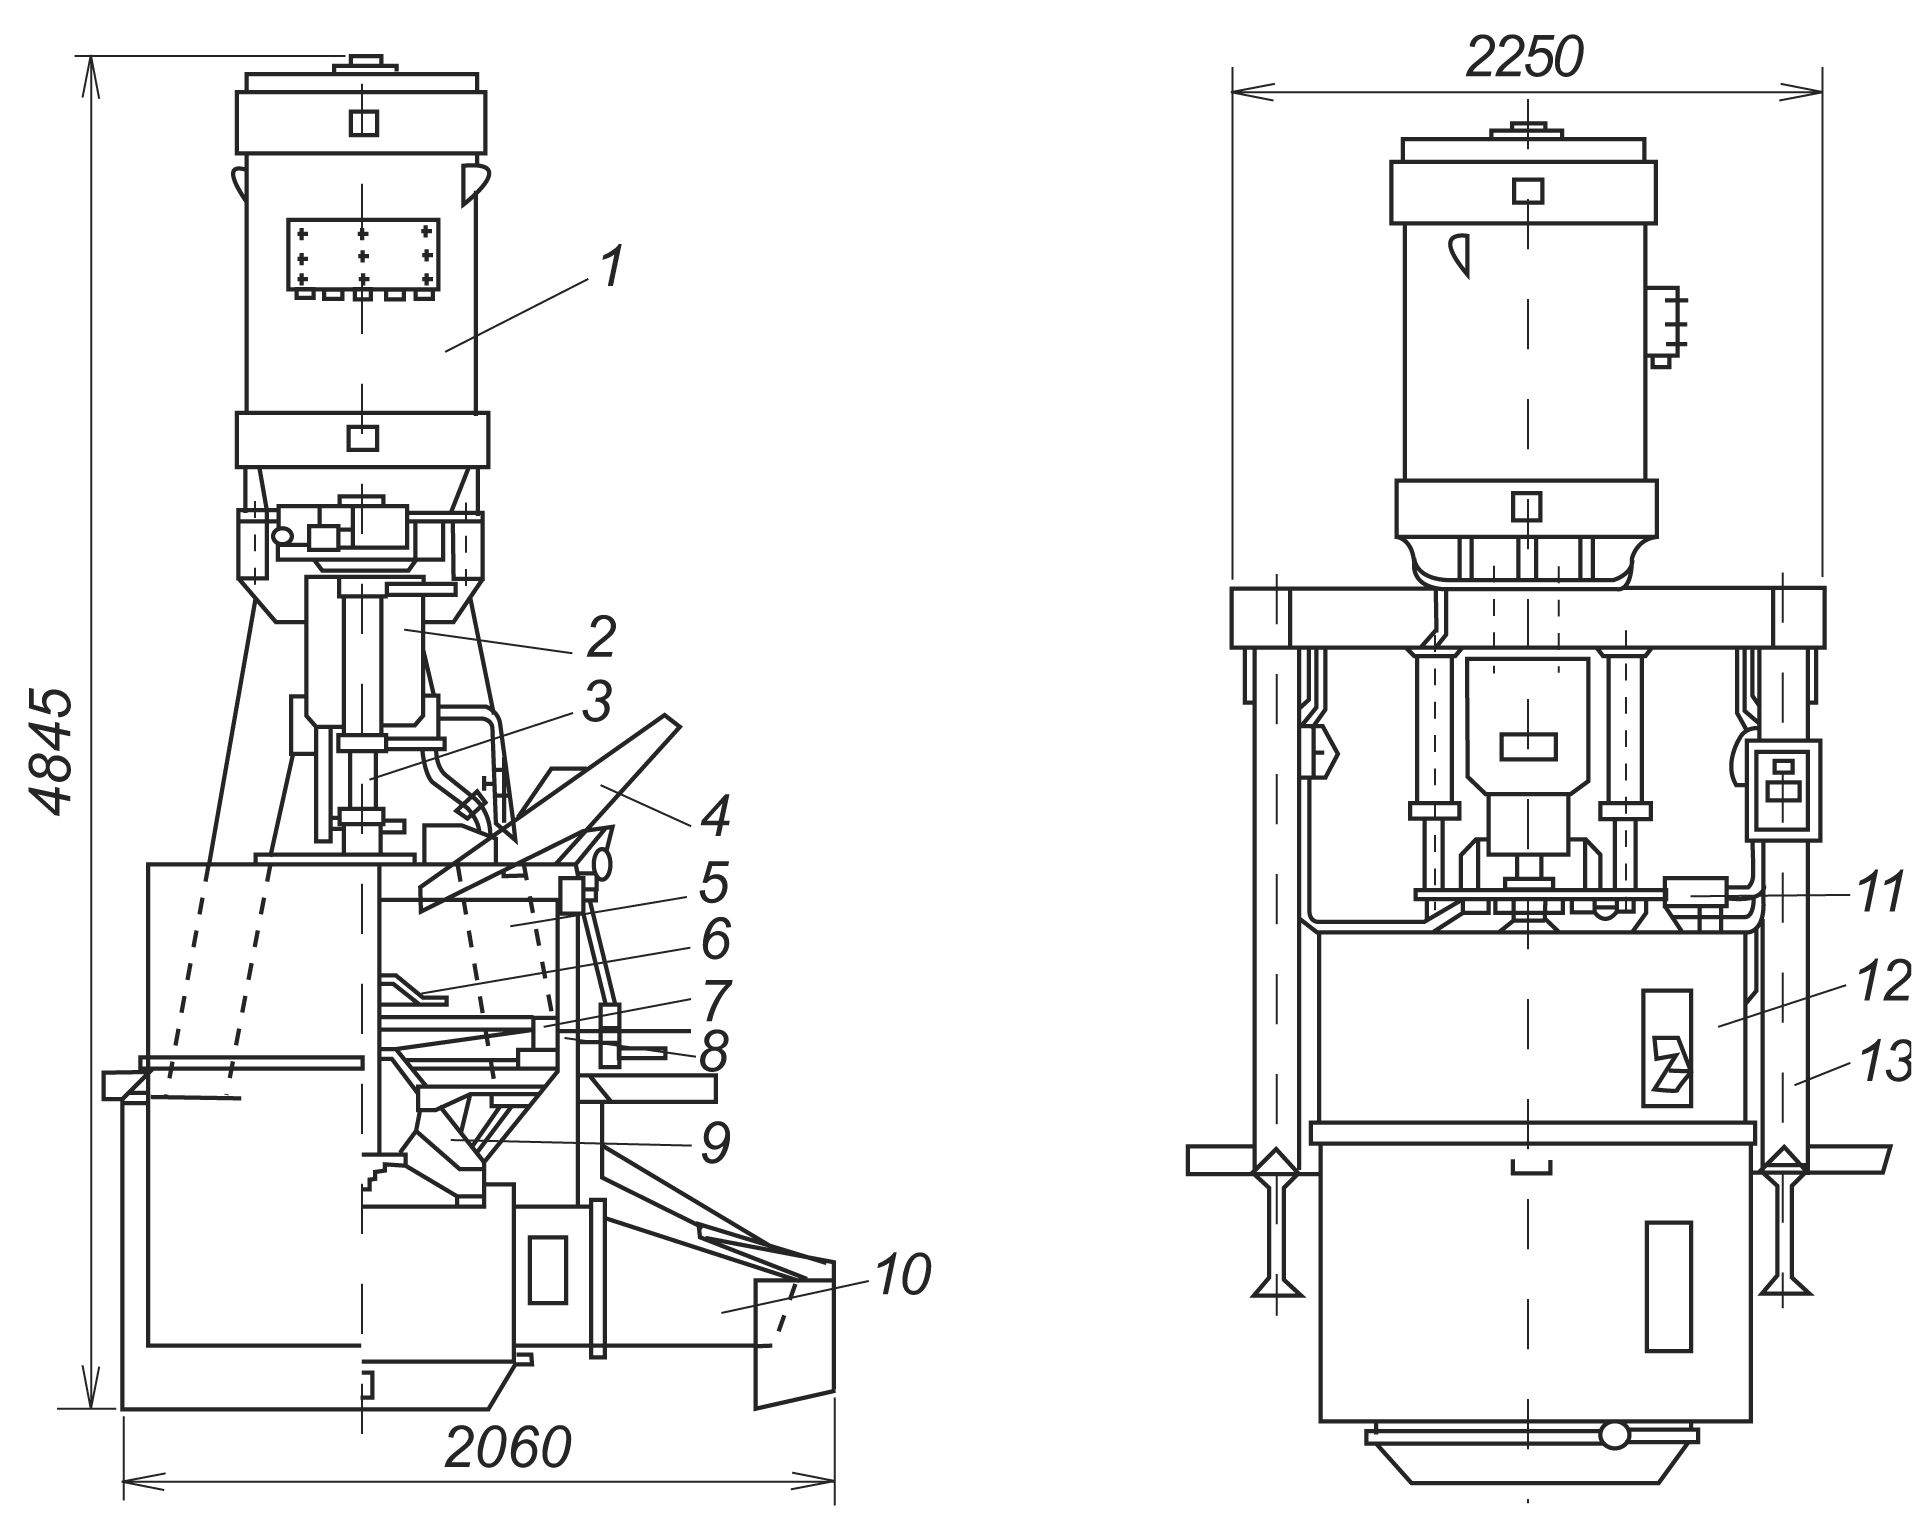 Centrifuge FPN-1251T-01: 1-electric motor; 2-suspension; 3-shaft; 4-tray; 5-rotor; 6-disk; 7-lifting pipe; 8-sugar unloading mechanism; 9-shut-off cone; 10-segregator; 11-loading regulator; 12-casing; 13-metal structure